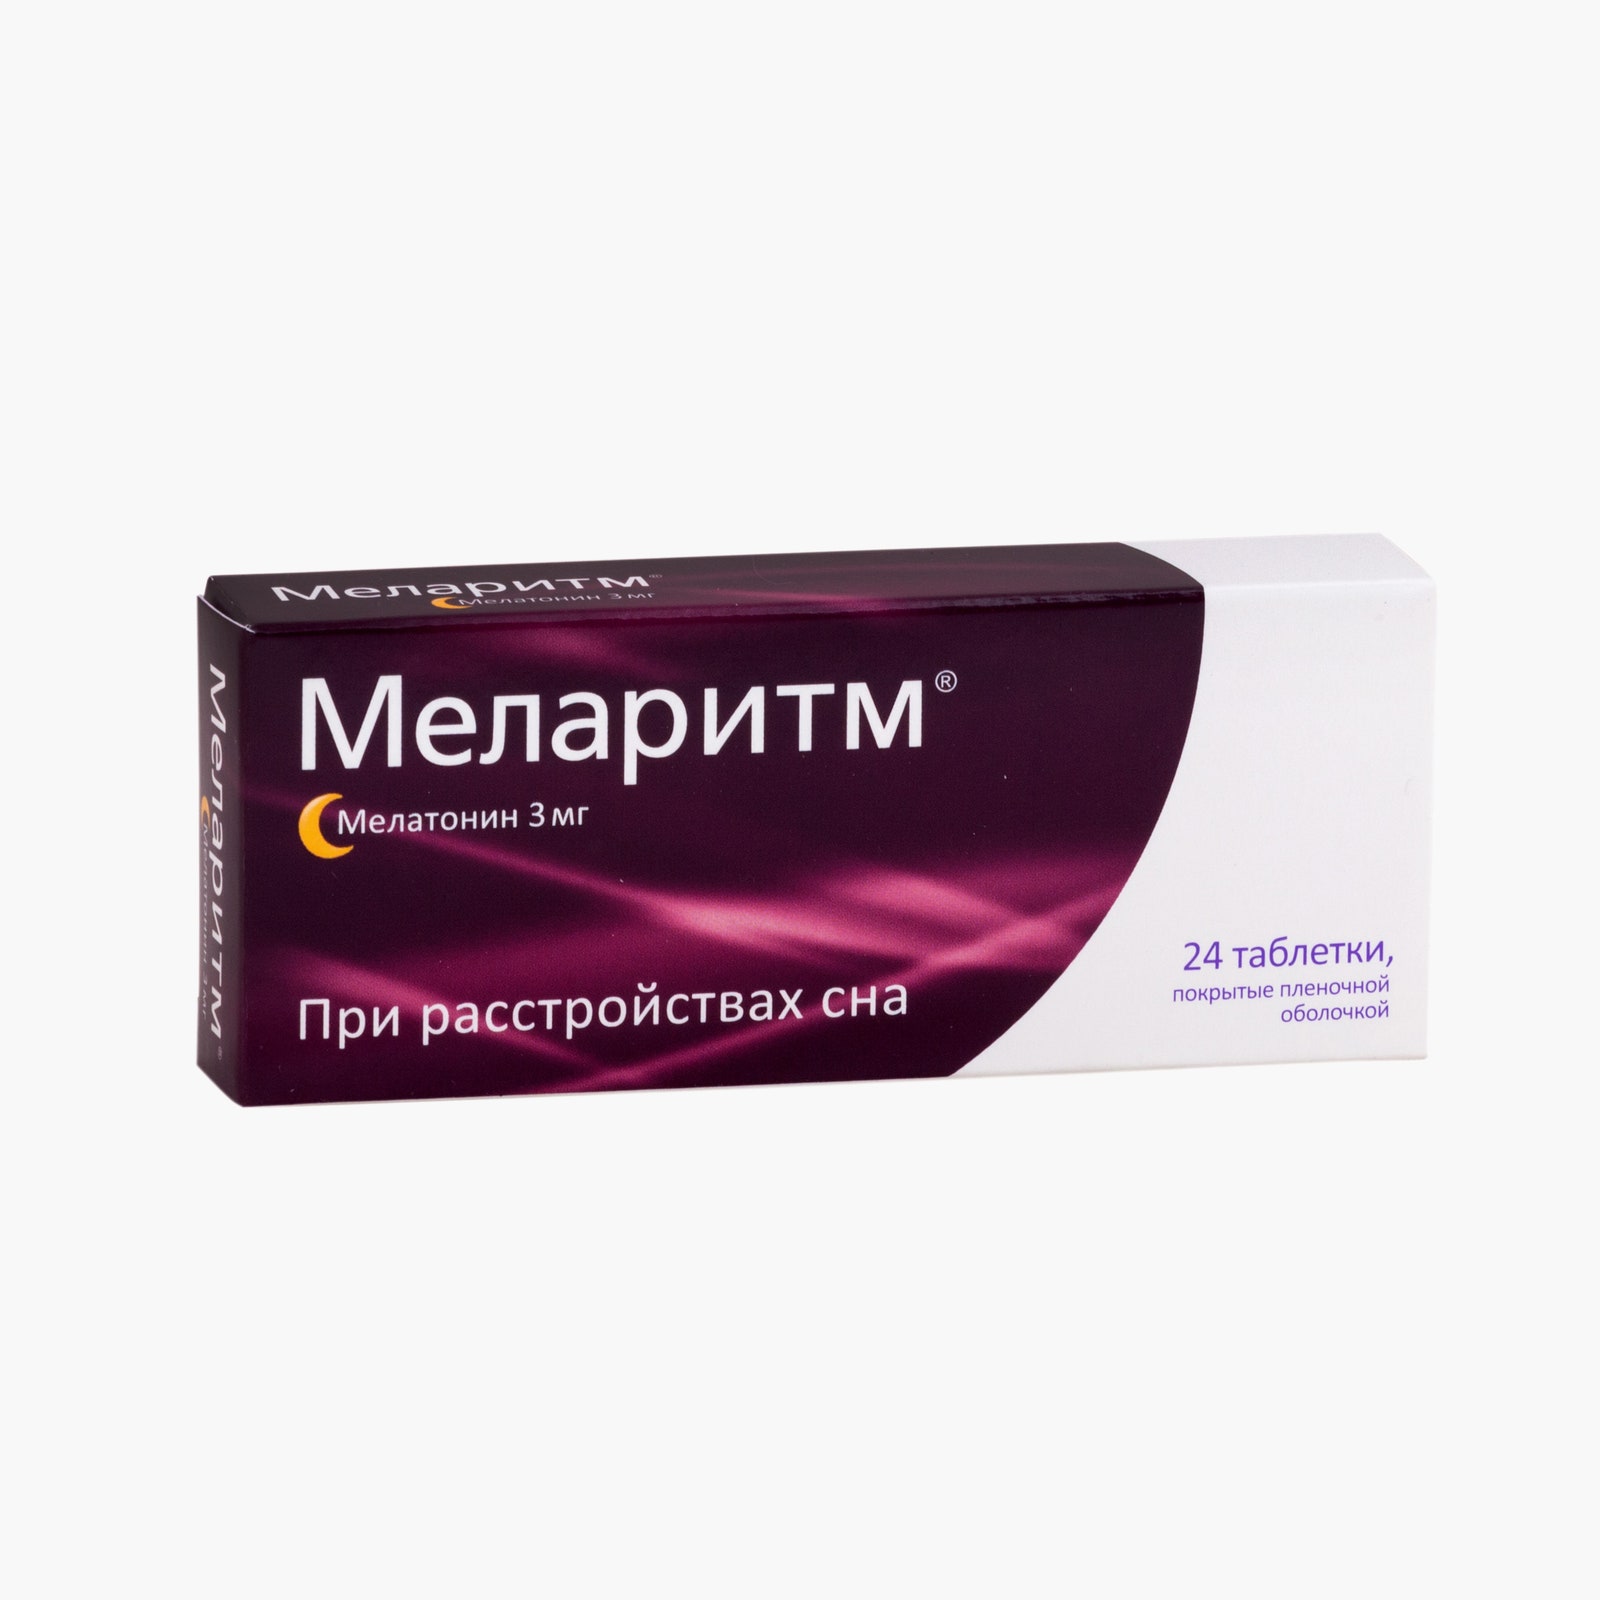 Средство от расстройств сна «Меларитм» 557 рублей